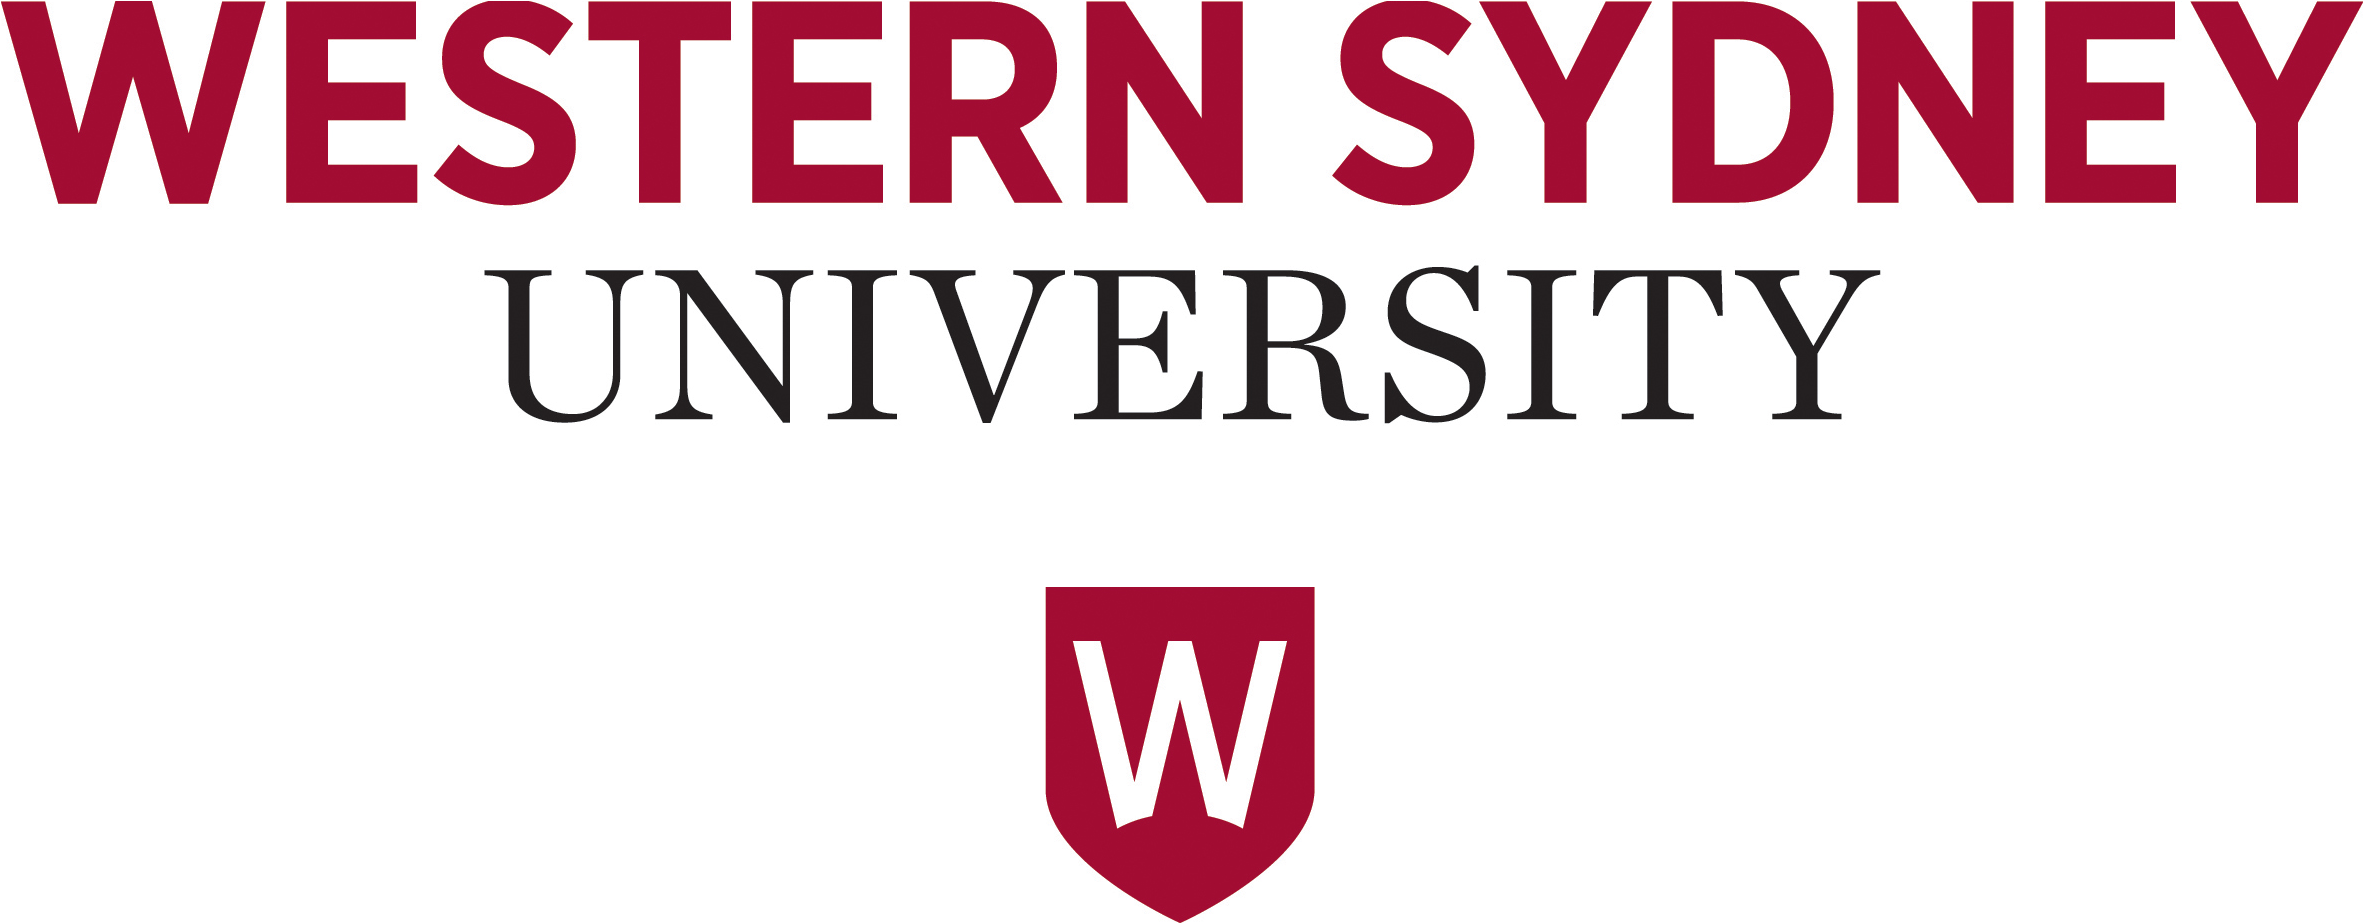 Western_Sydney_University_logo.png